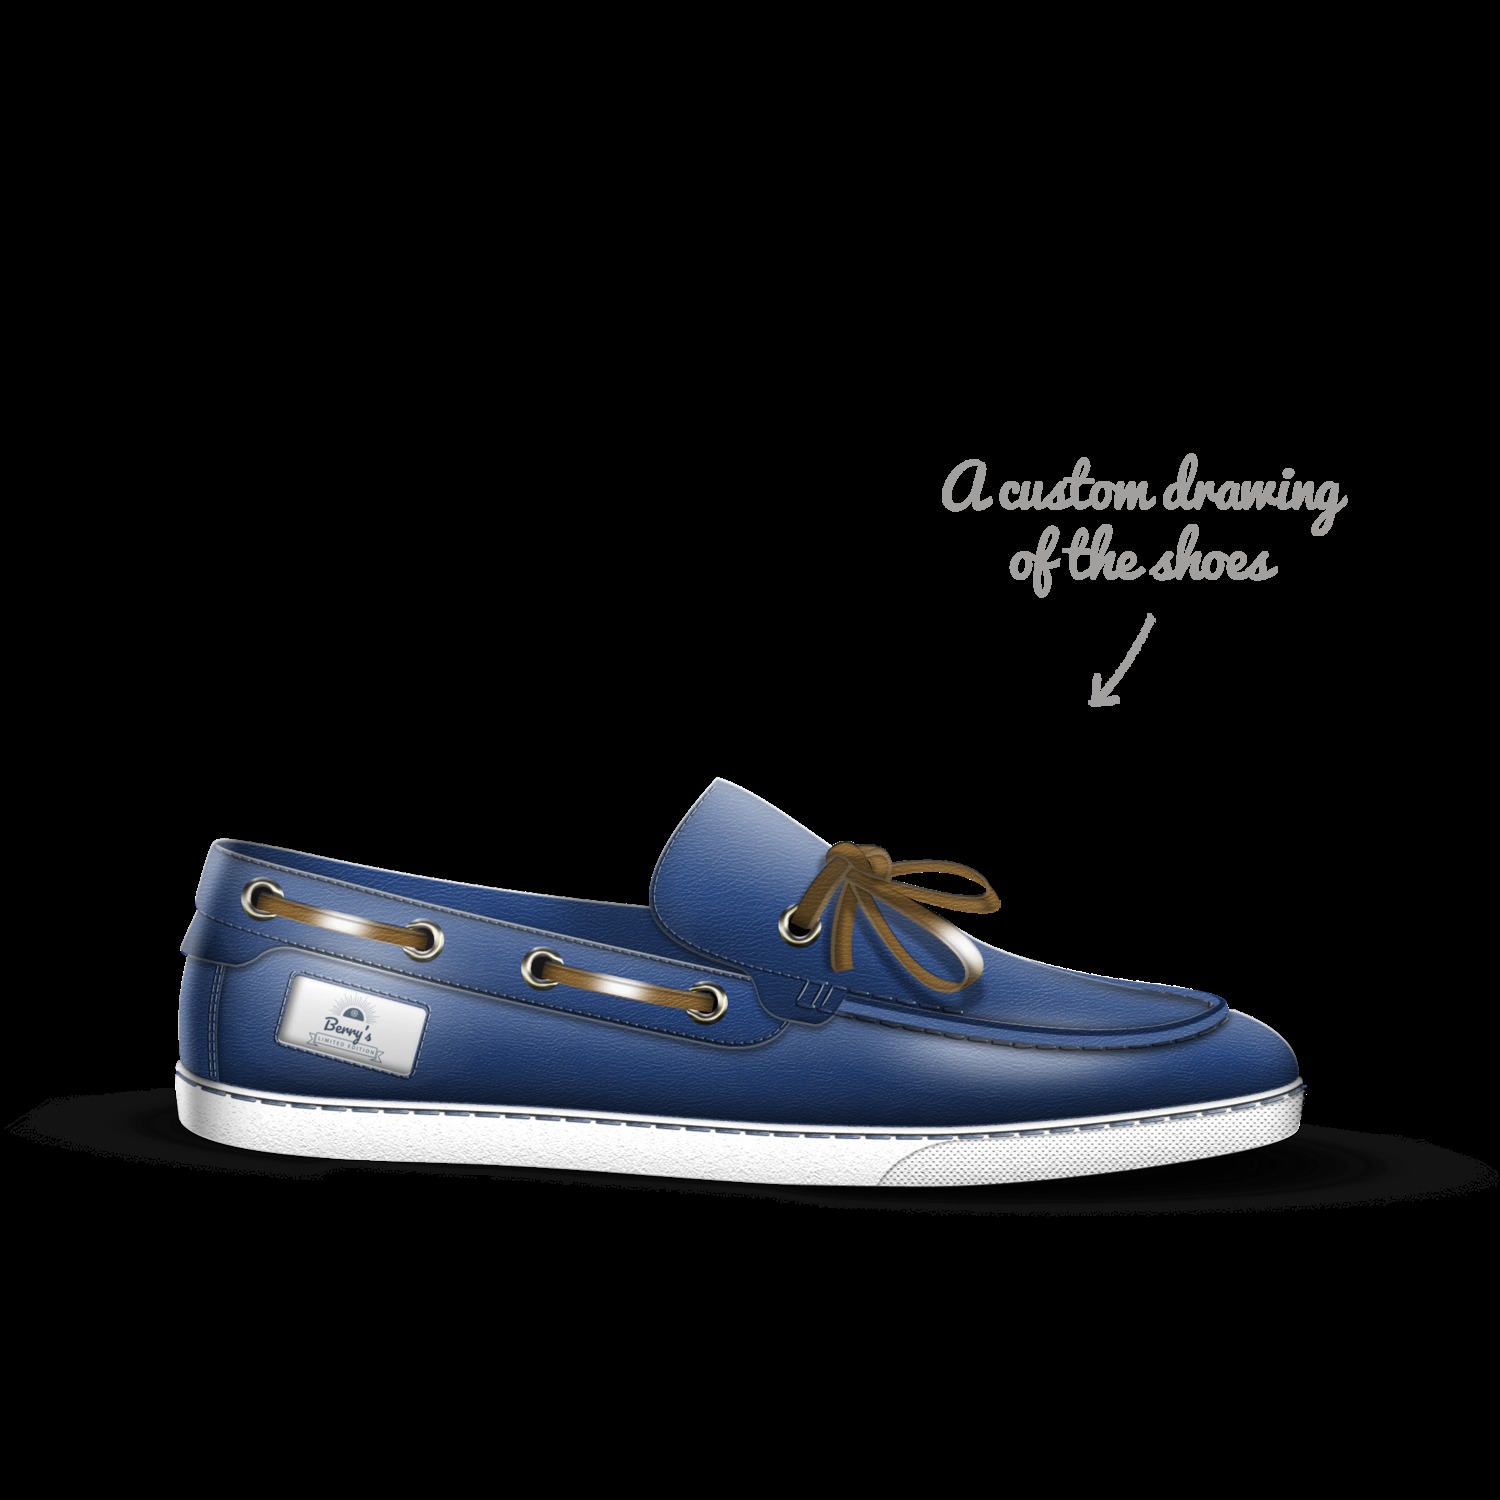 A Custom Shoe concept by Jordan Berry